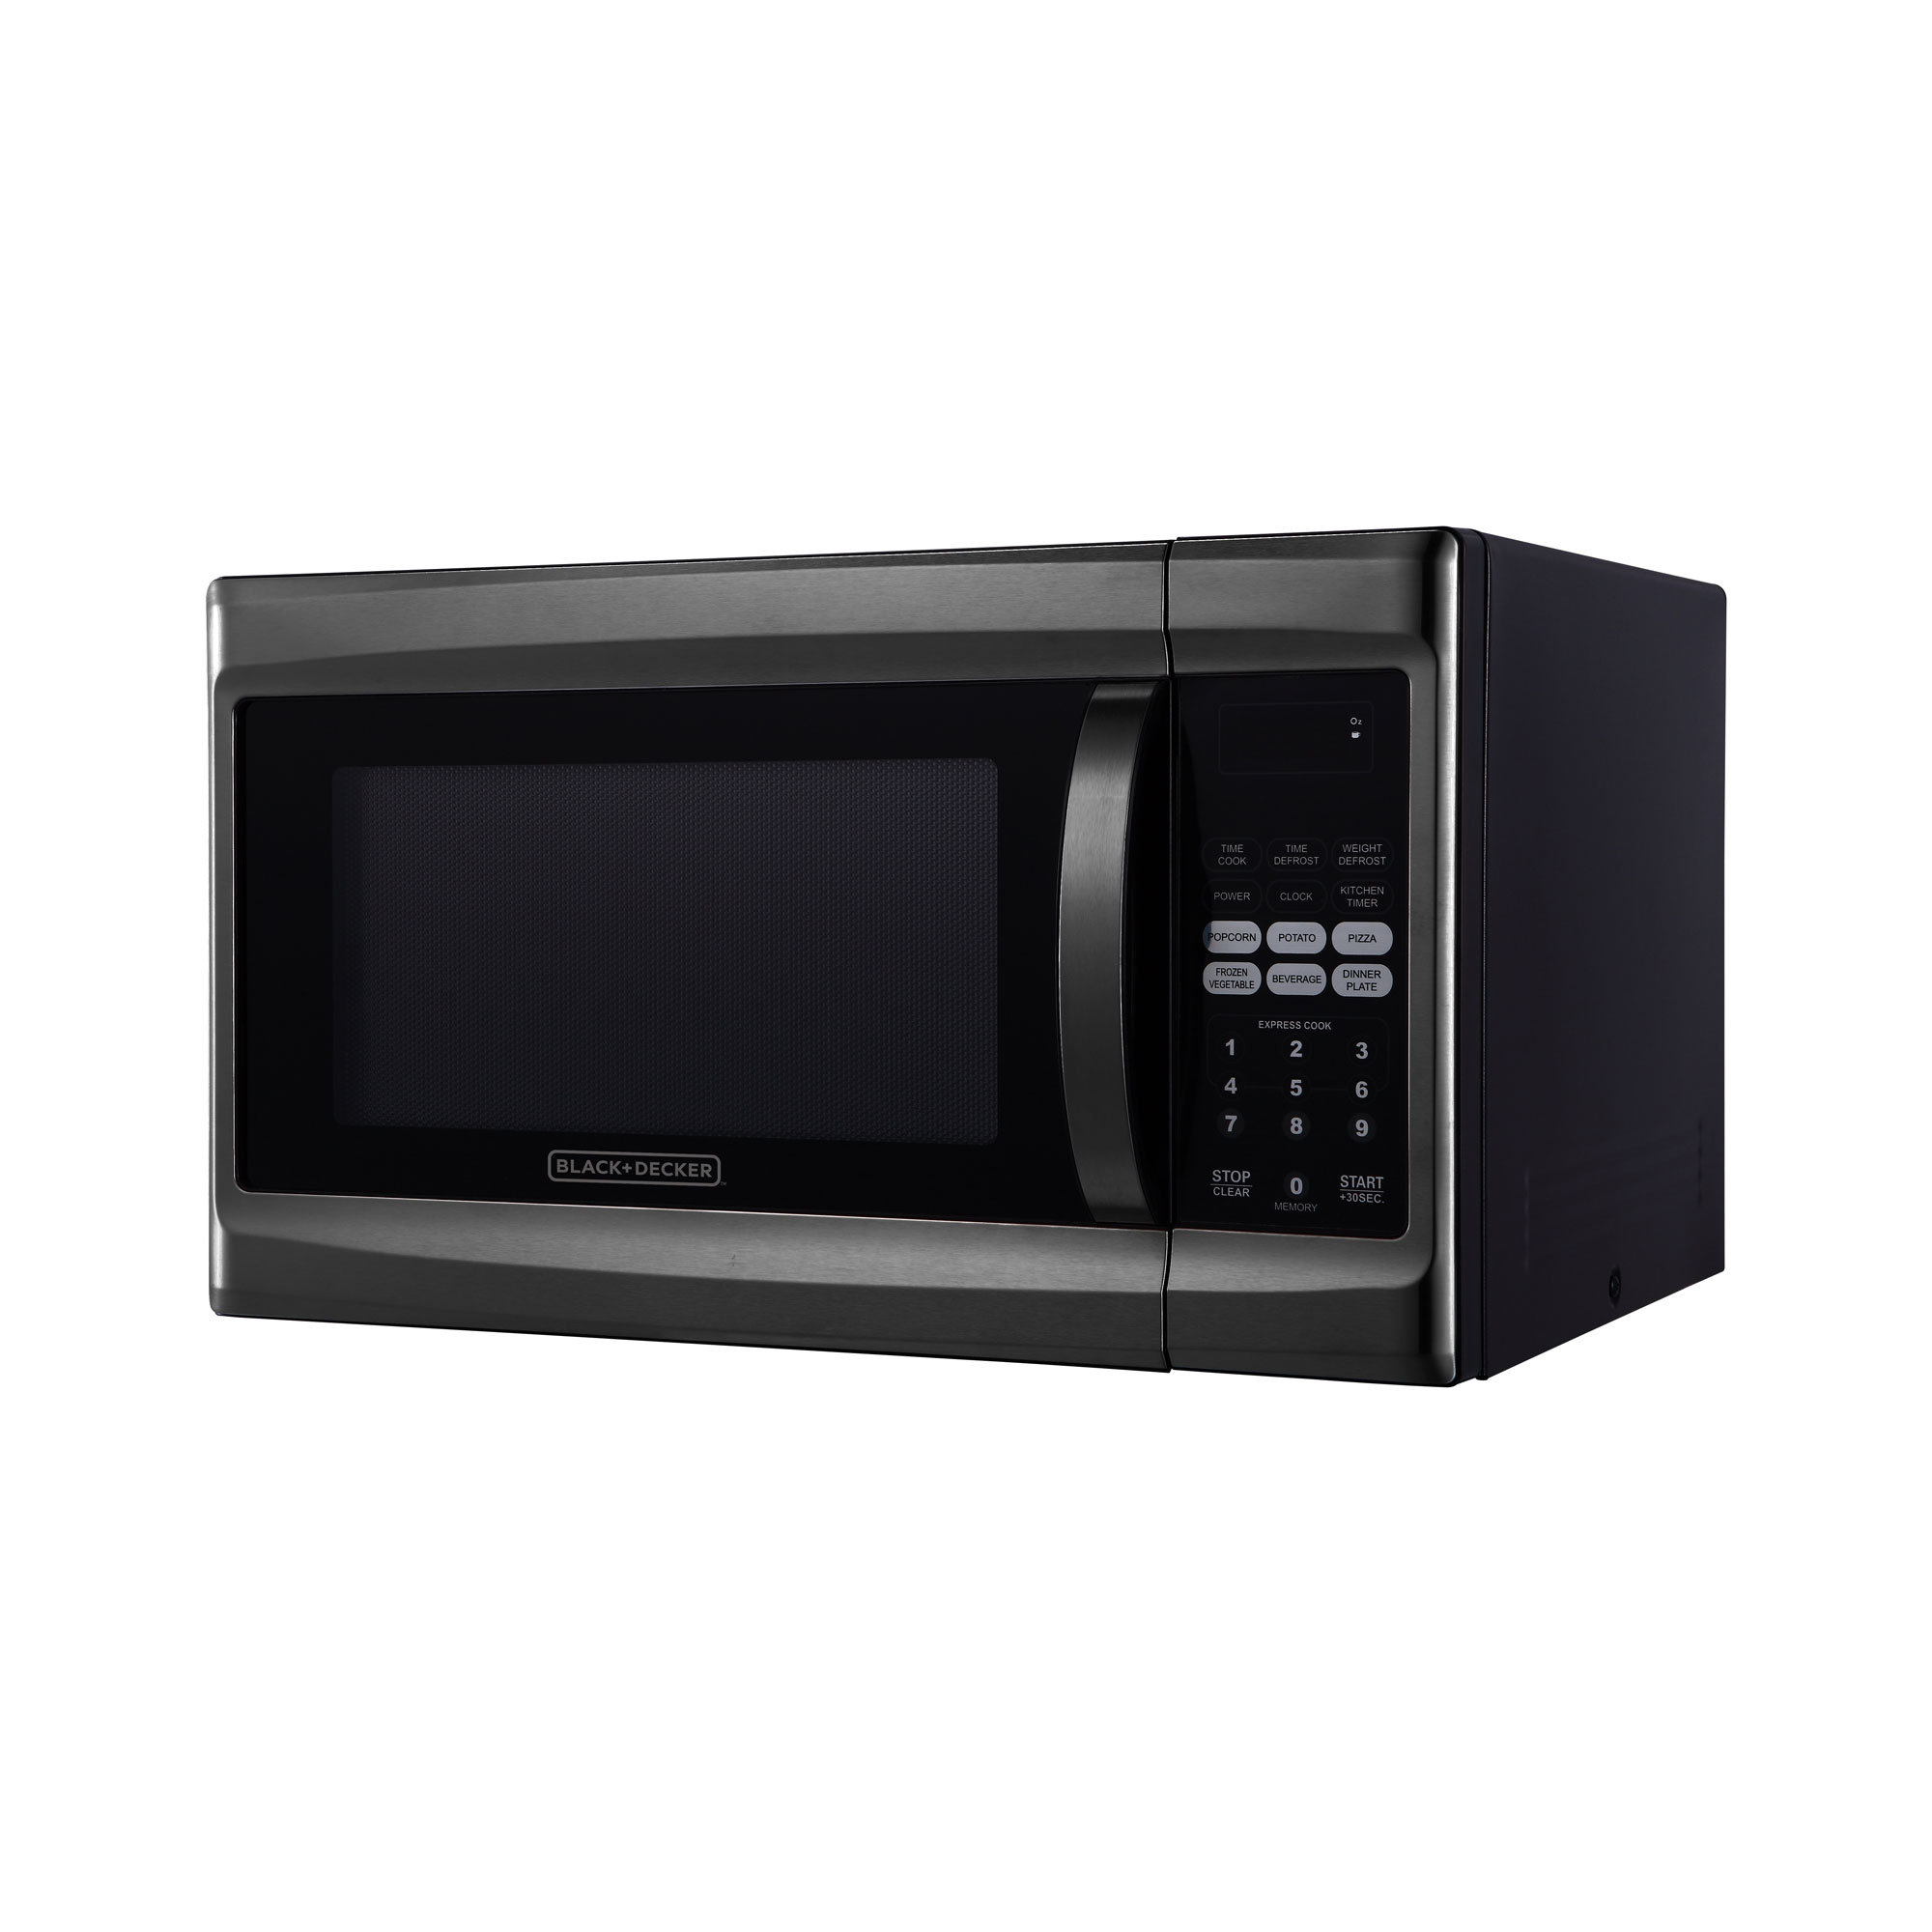 Black+decker 1000 Watt 1.3 Cubic Feet Microwave Oven, Black Stainless Steel